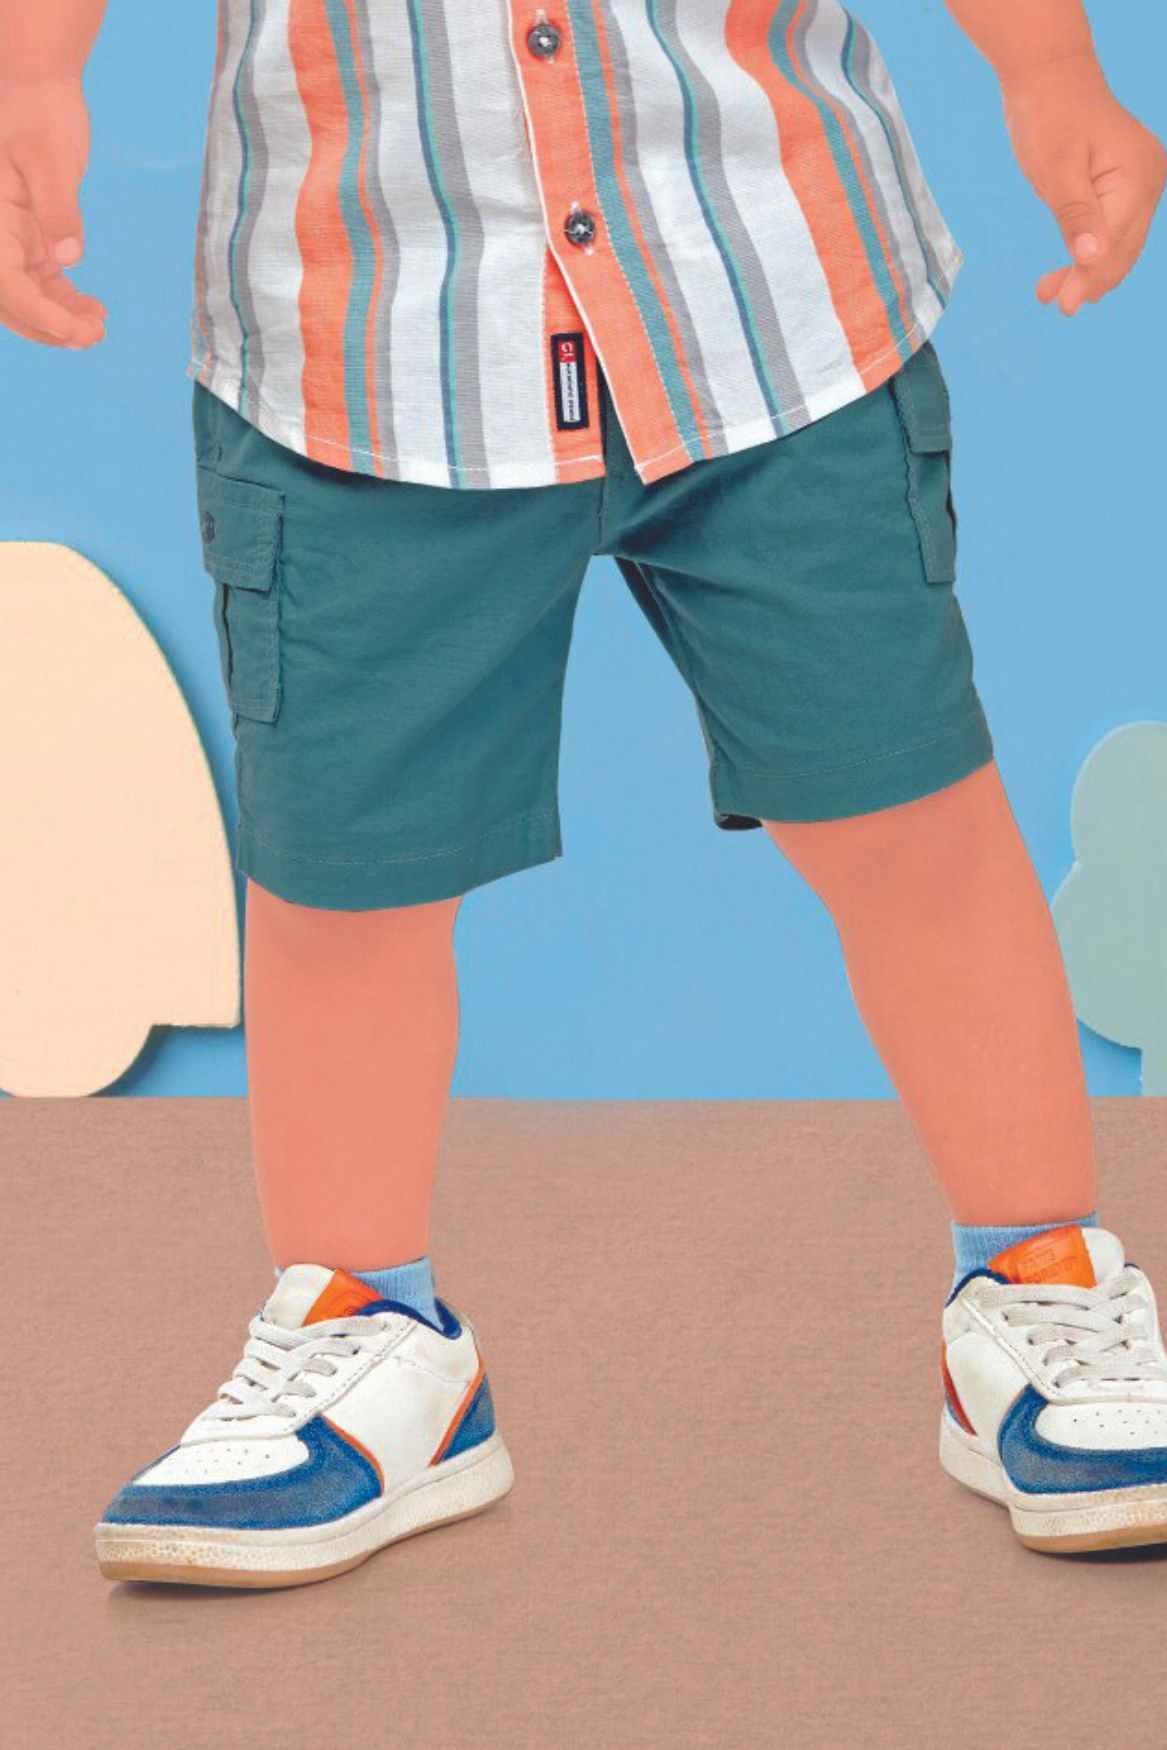 Orange Striped Shirt And Blue Shorts Set For Boys - Lagorii Kids